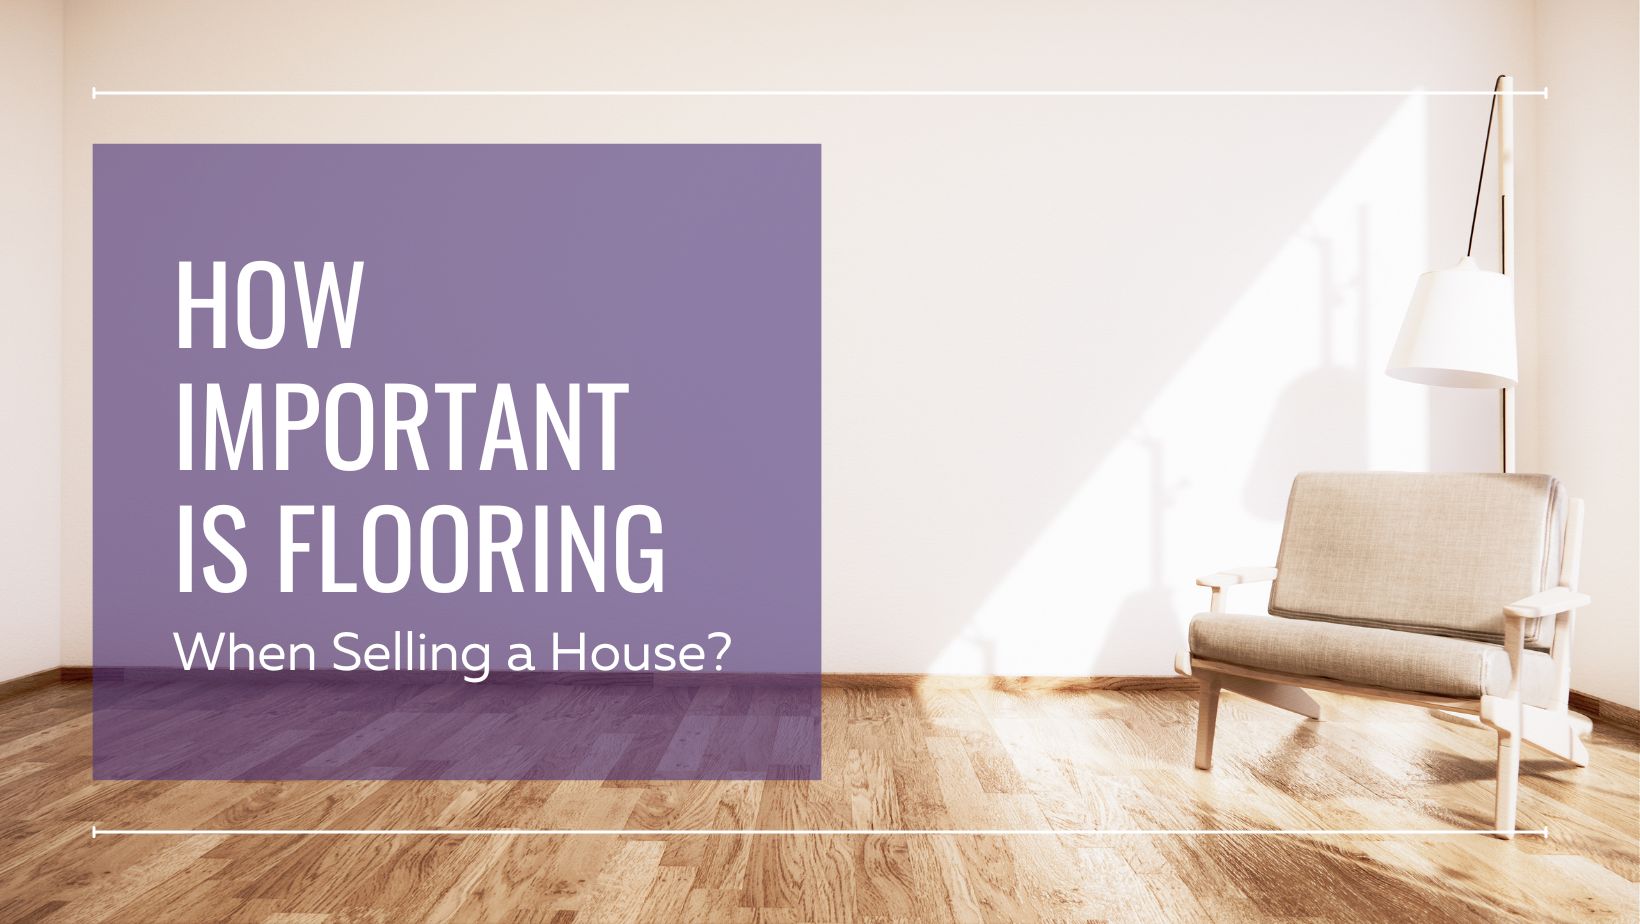 Carpet Roll-Out Garage Flooring is versatile Professional Grade flooring by  American Floor Mats